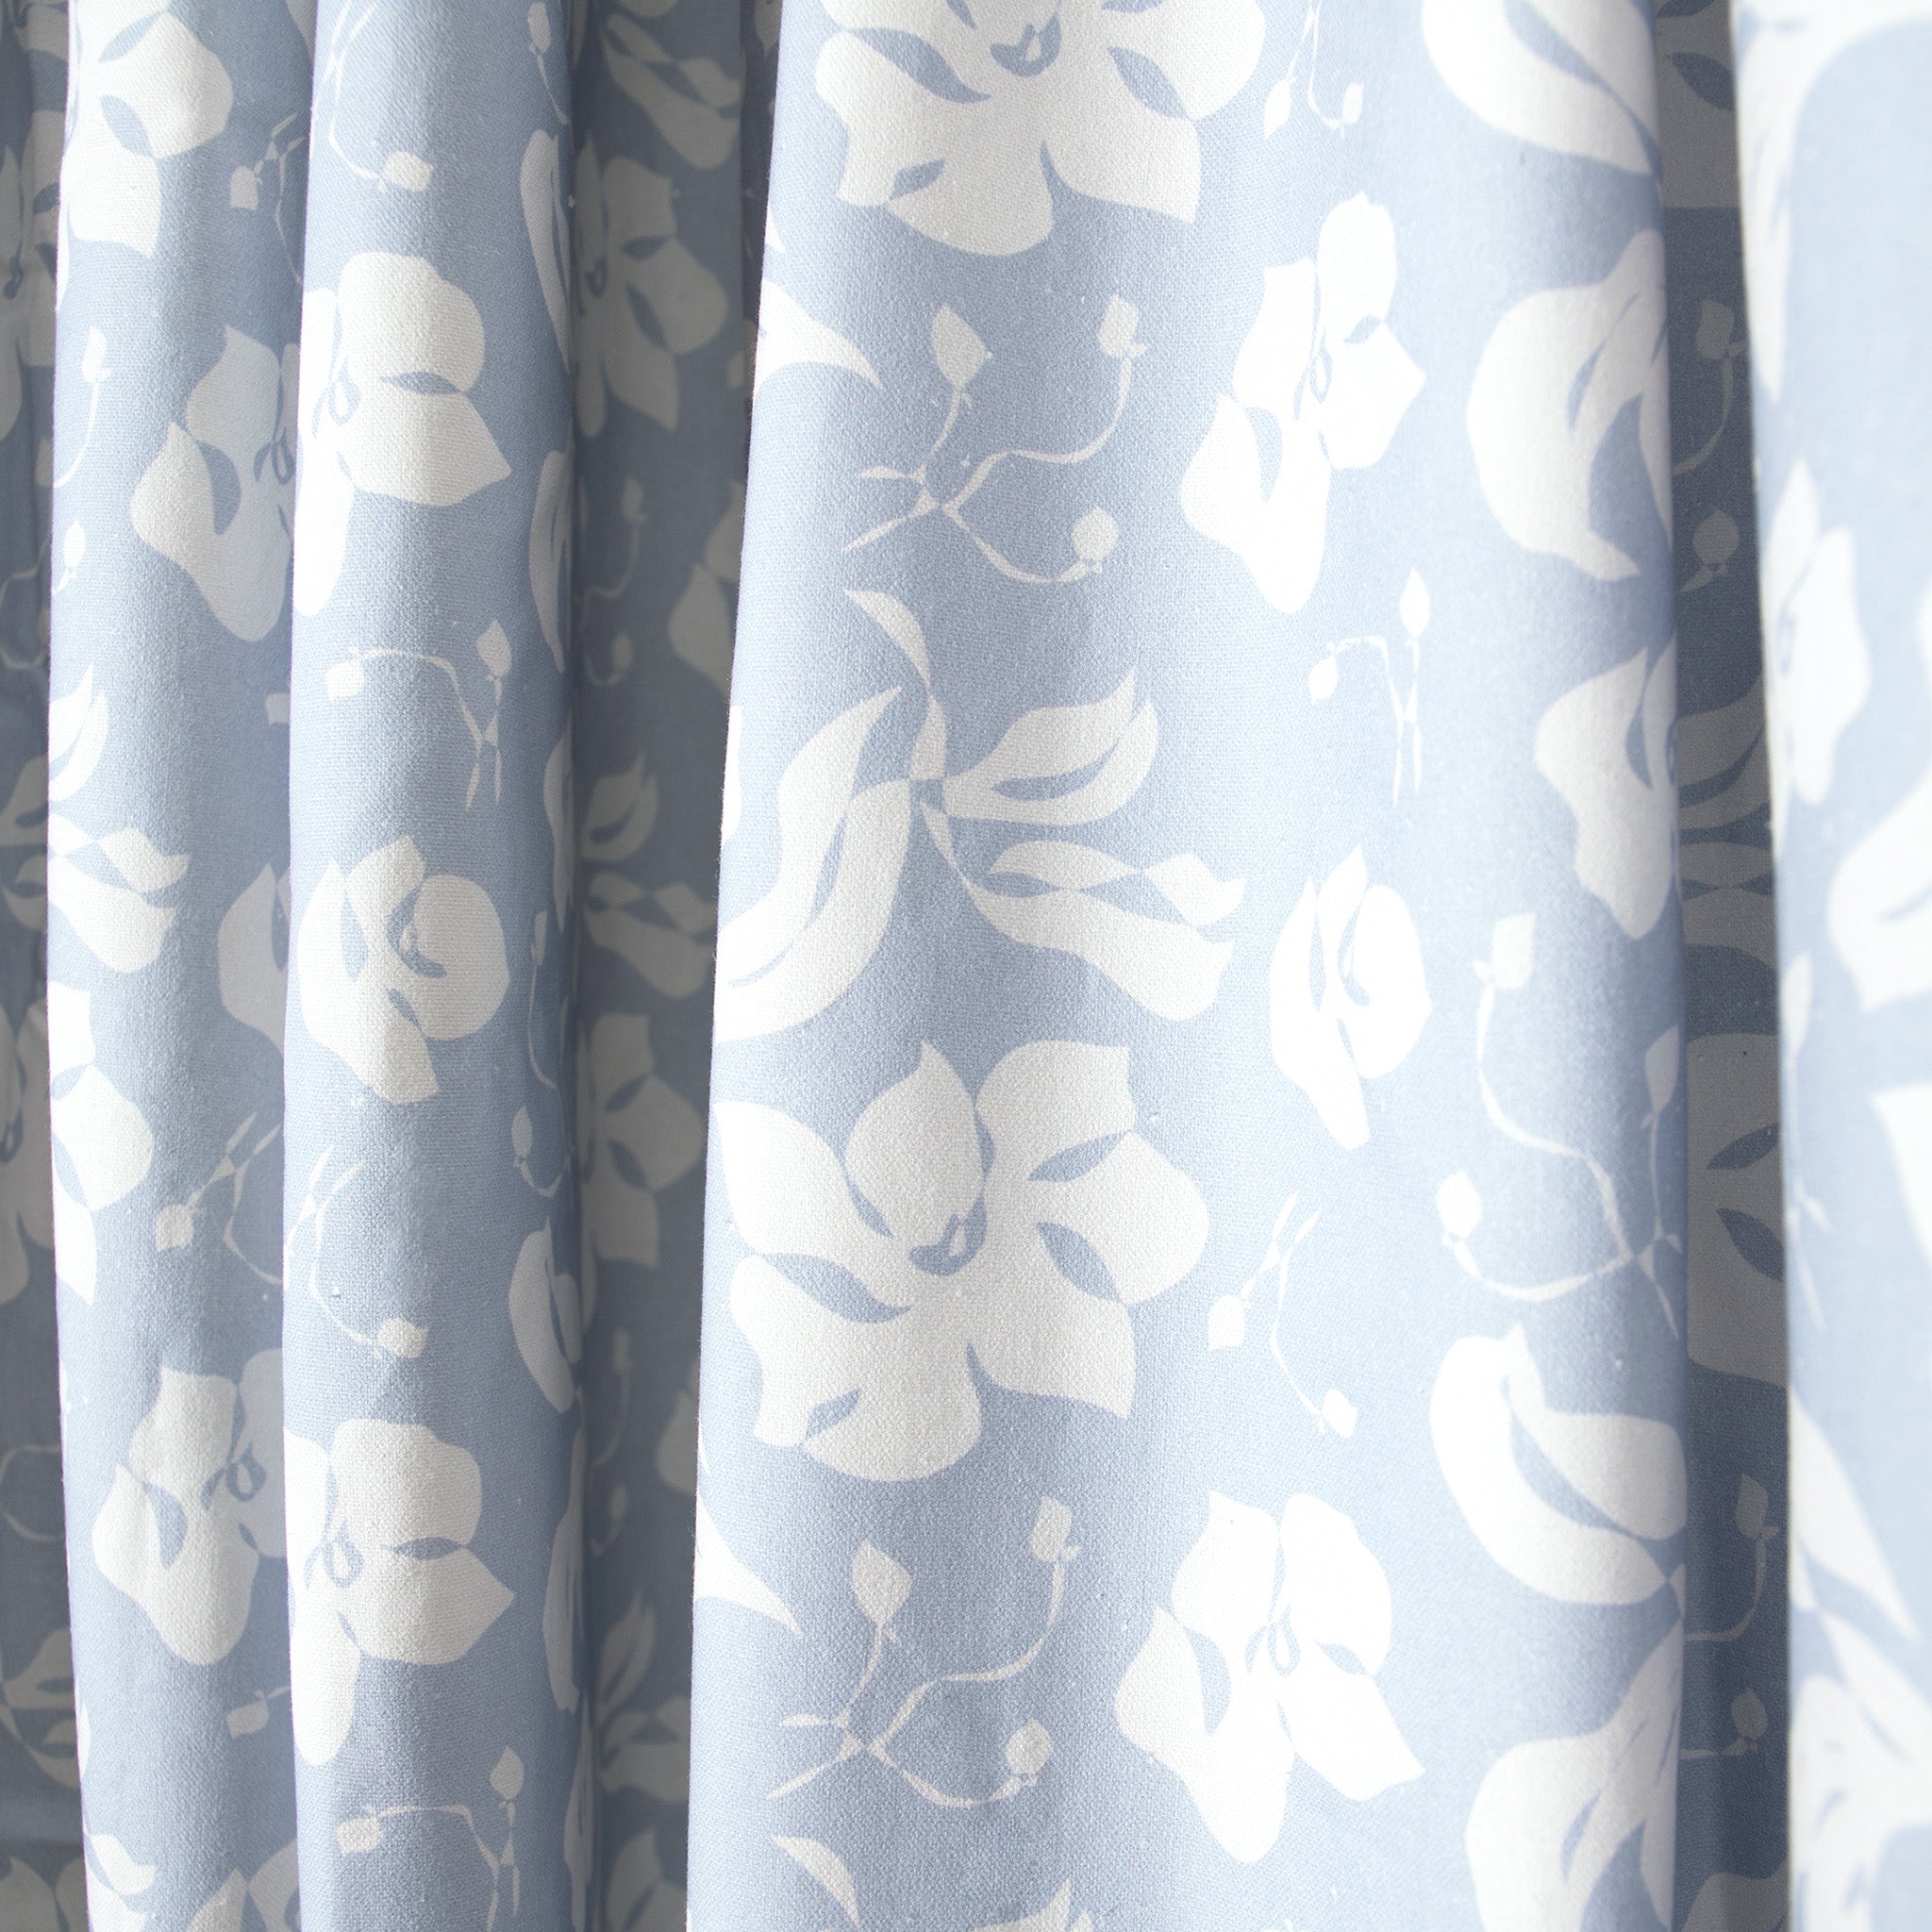 Cornflower Blue Floral Printed Curtain Close-Up